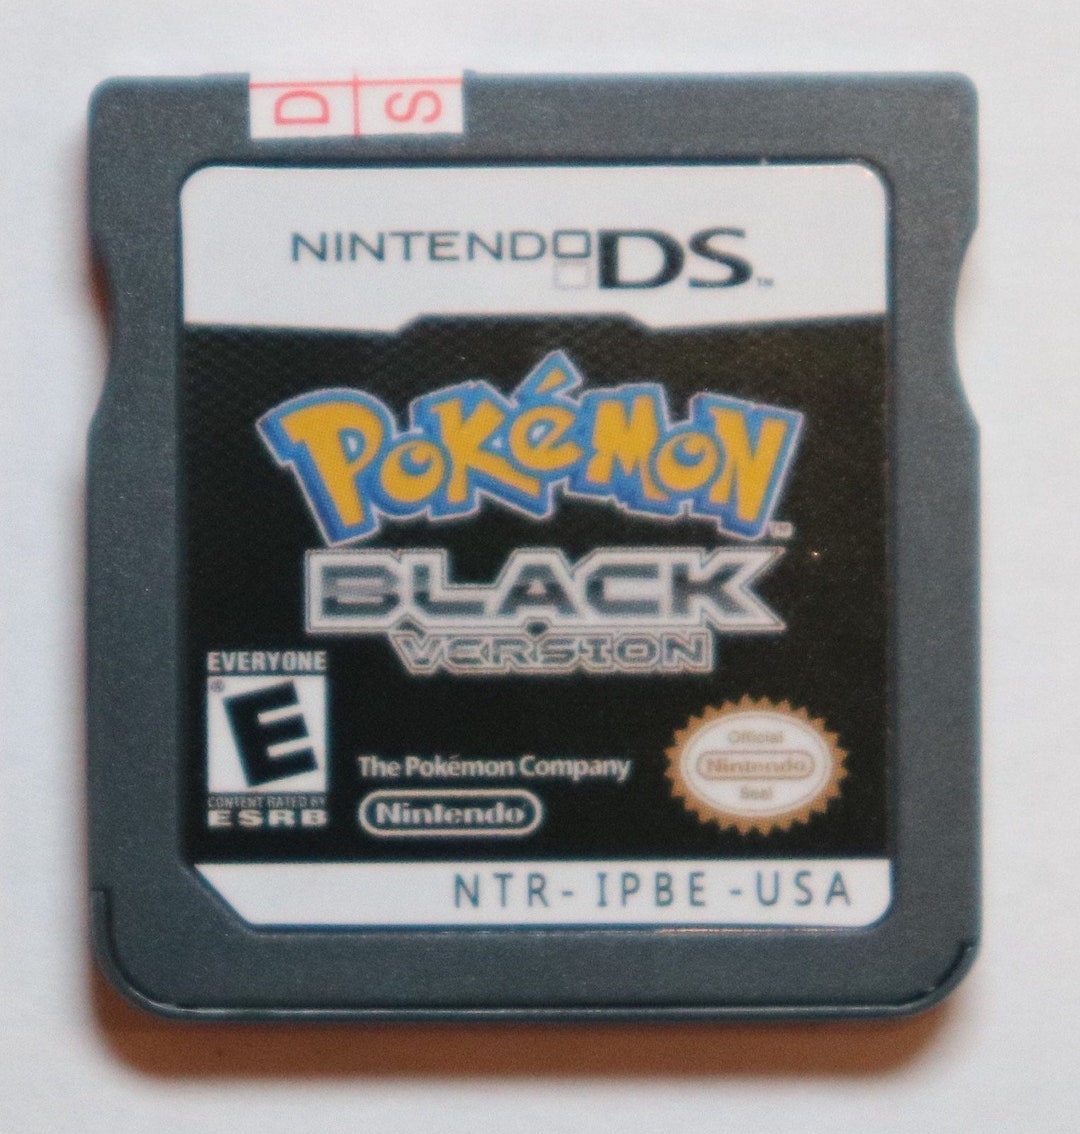 Pokemon - Black Version 2 (frieNDS) ROM - NDS Download - Emulator Games